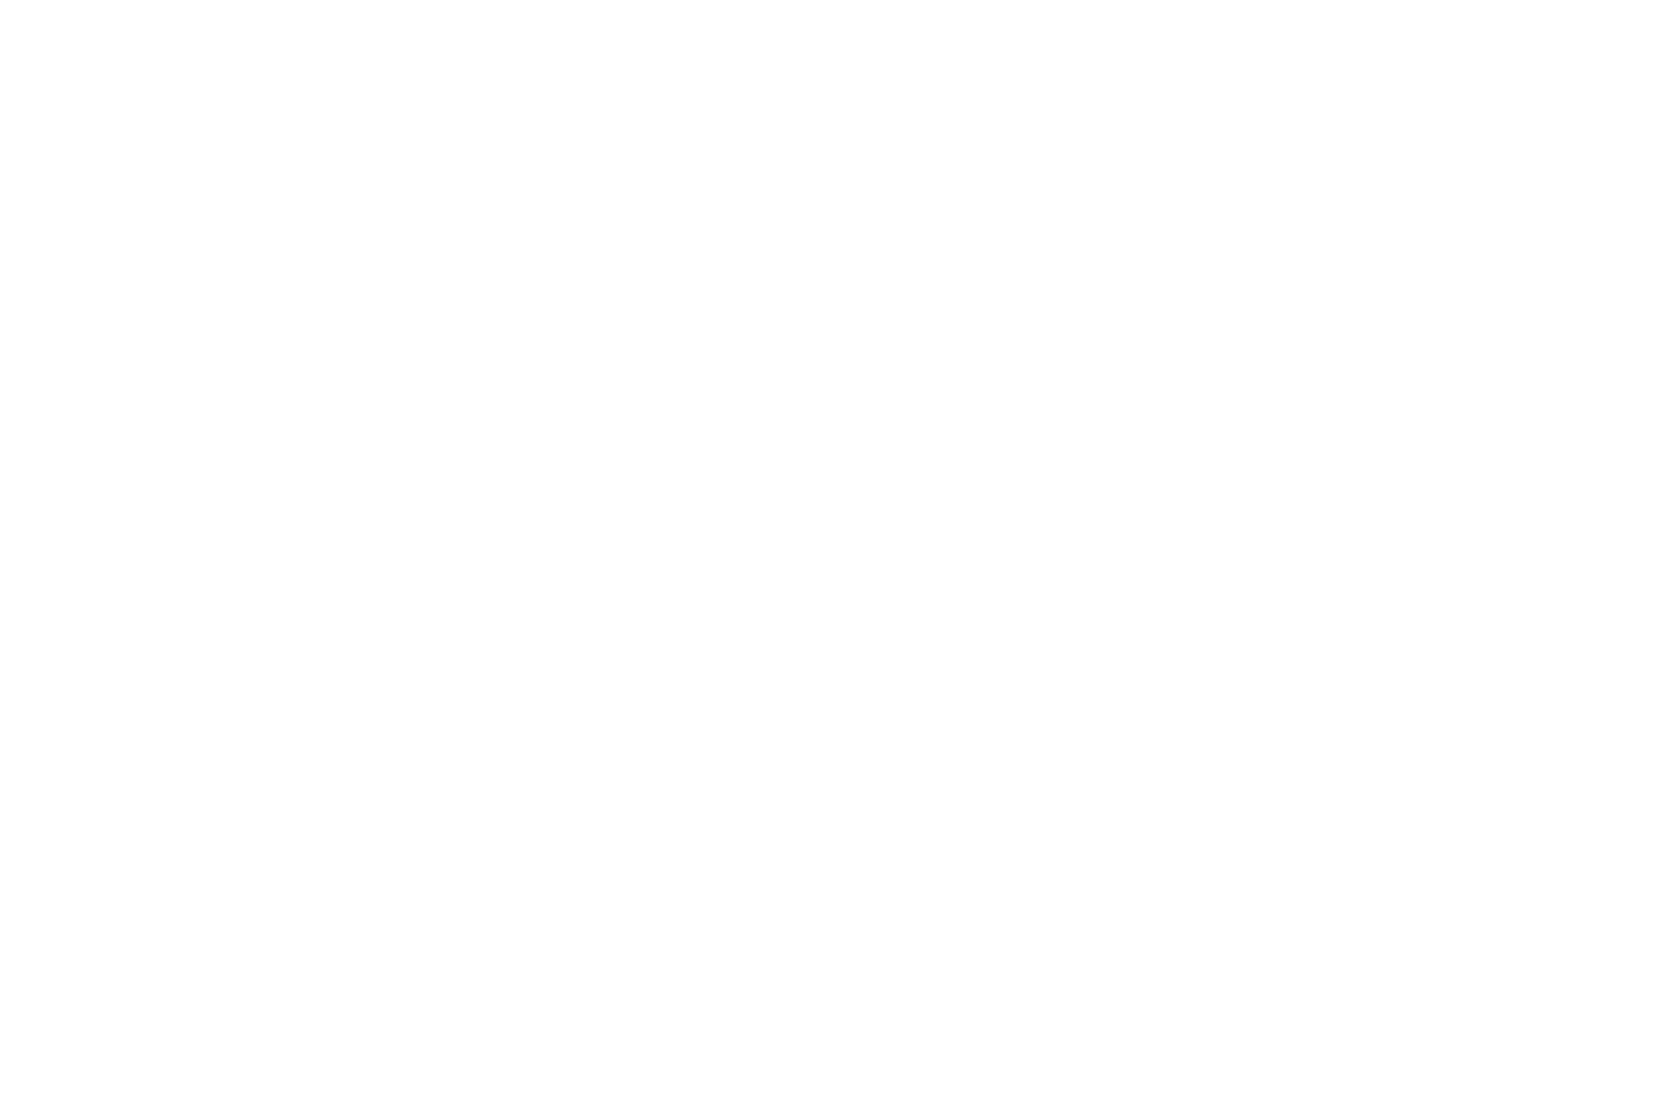 troychatka with fly agaric